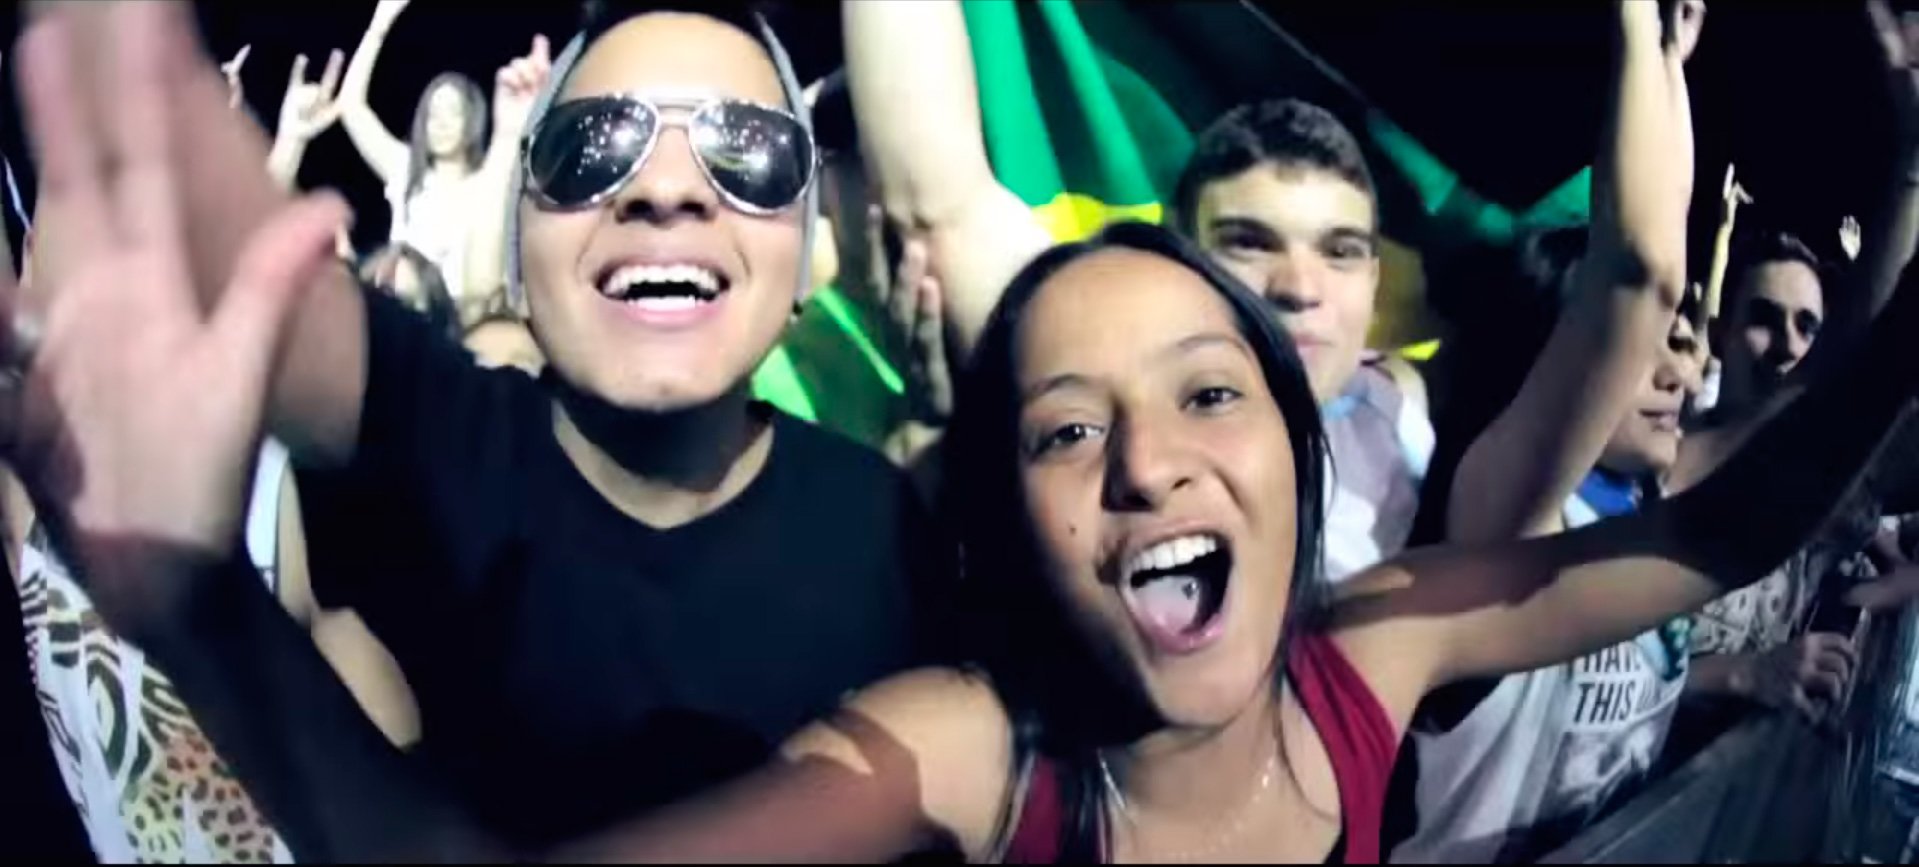 Nicky Romero - Protocol Flight #08 - Brazil + US tour